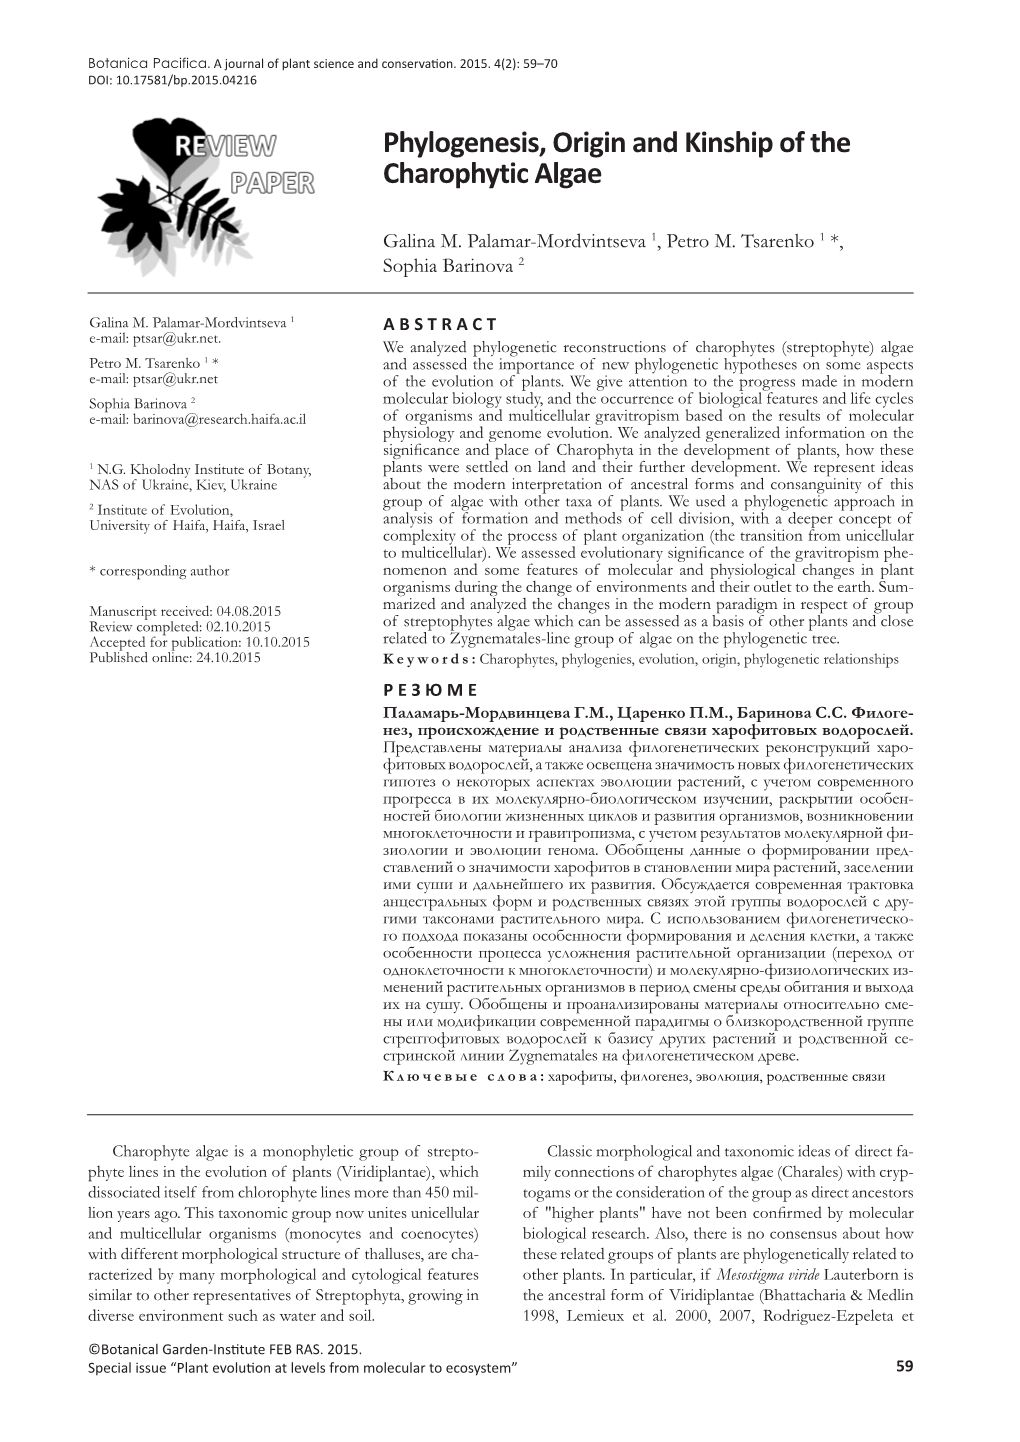 Phylogenesis, Origin and Kinship of the Charophytic Algae